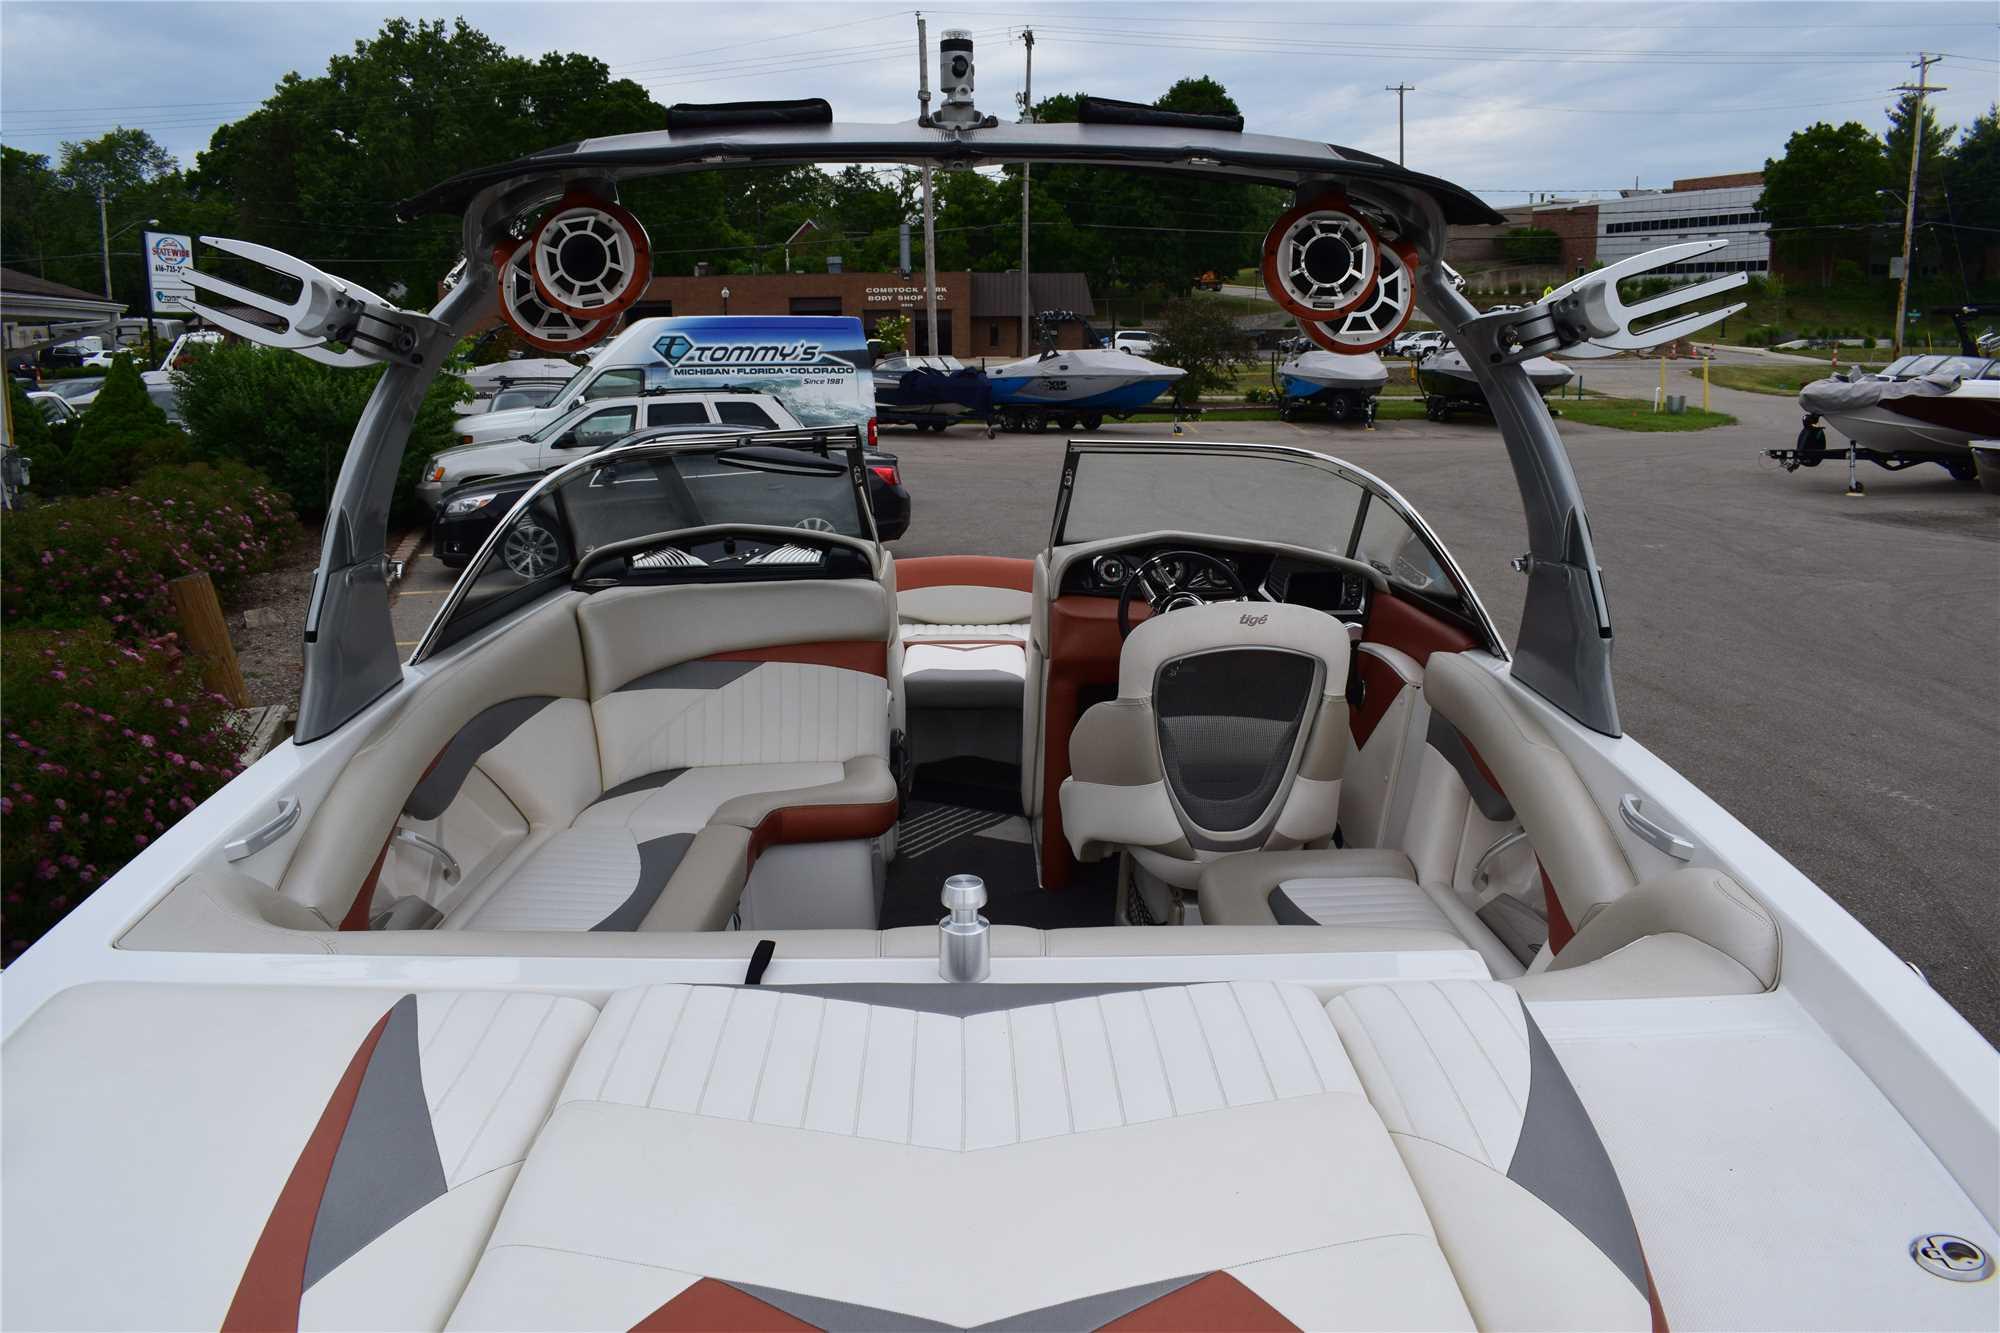 2011 Tige Model: RZ2 Platinum. VIN:TIX0797CK011. Hours: 354. This boat is located in Grand Rapids, M